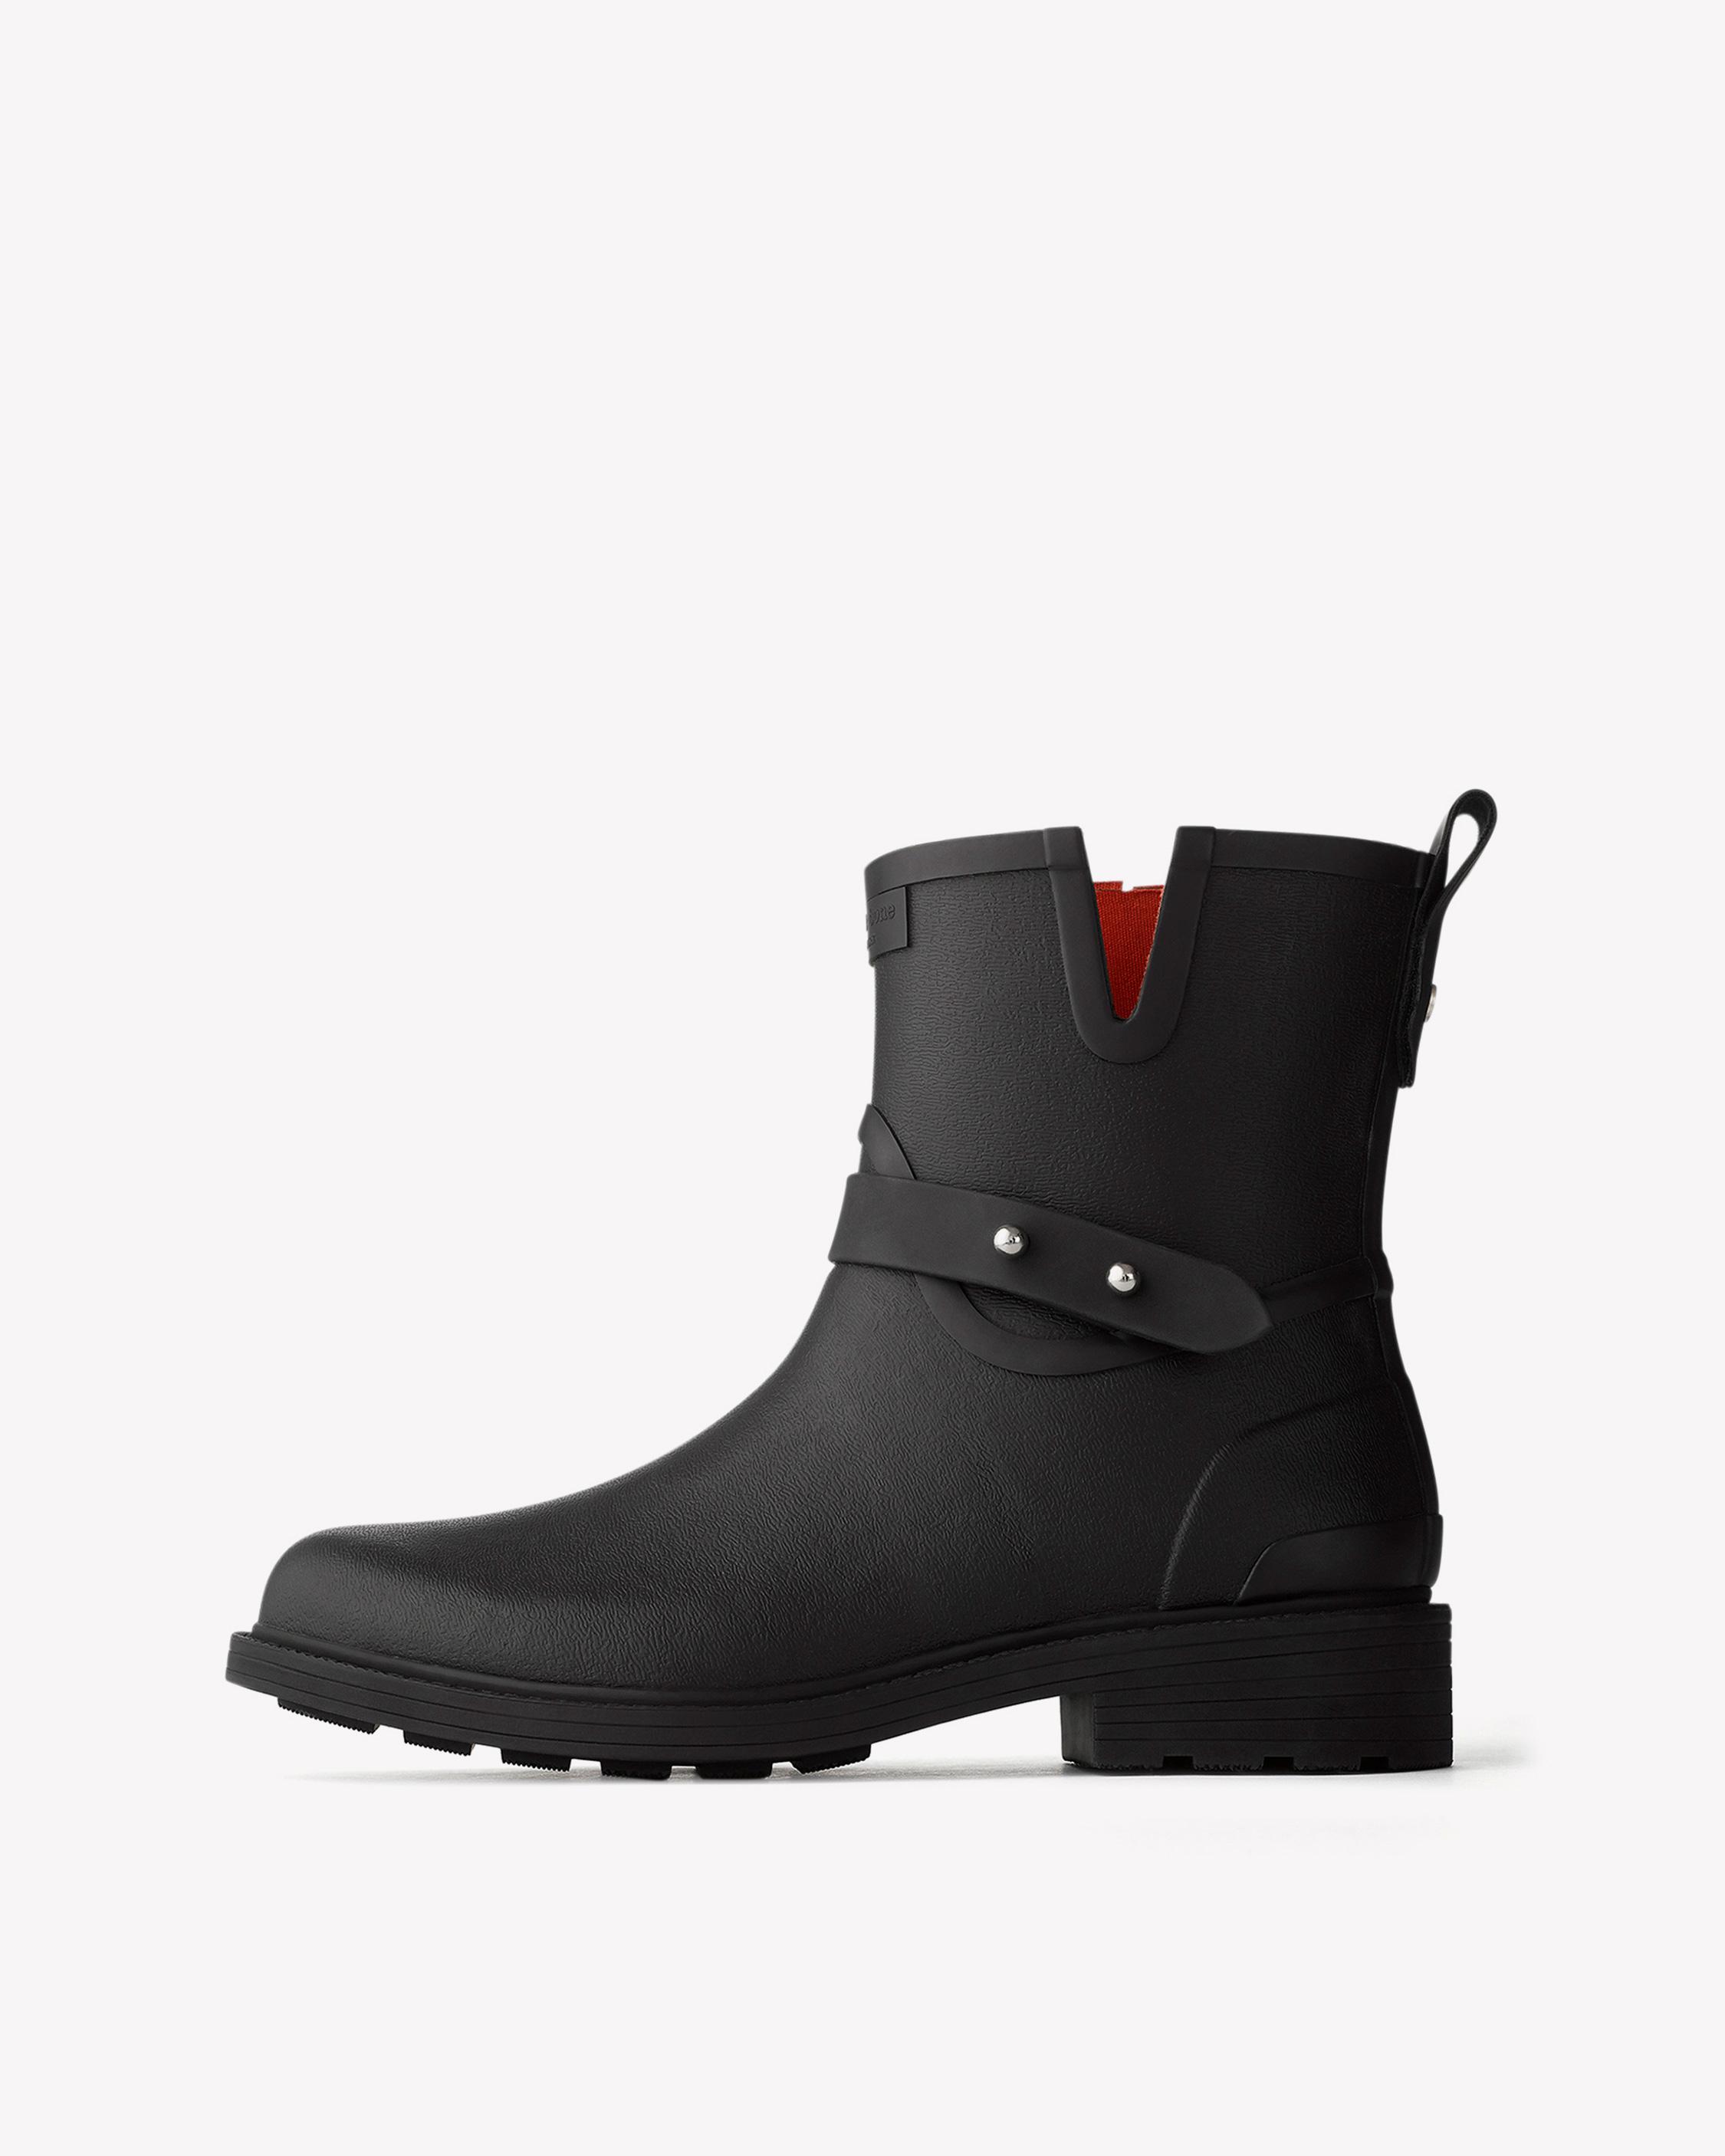 Moto Rain Boots for Women in Black 